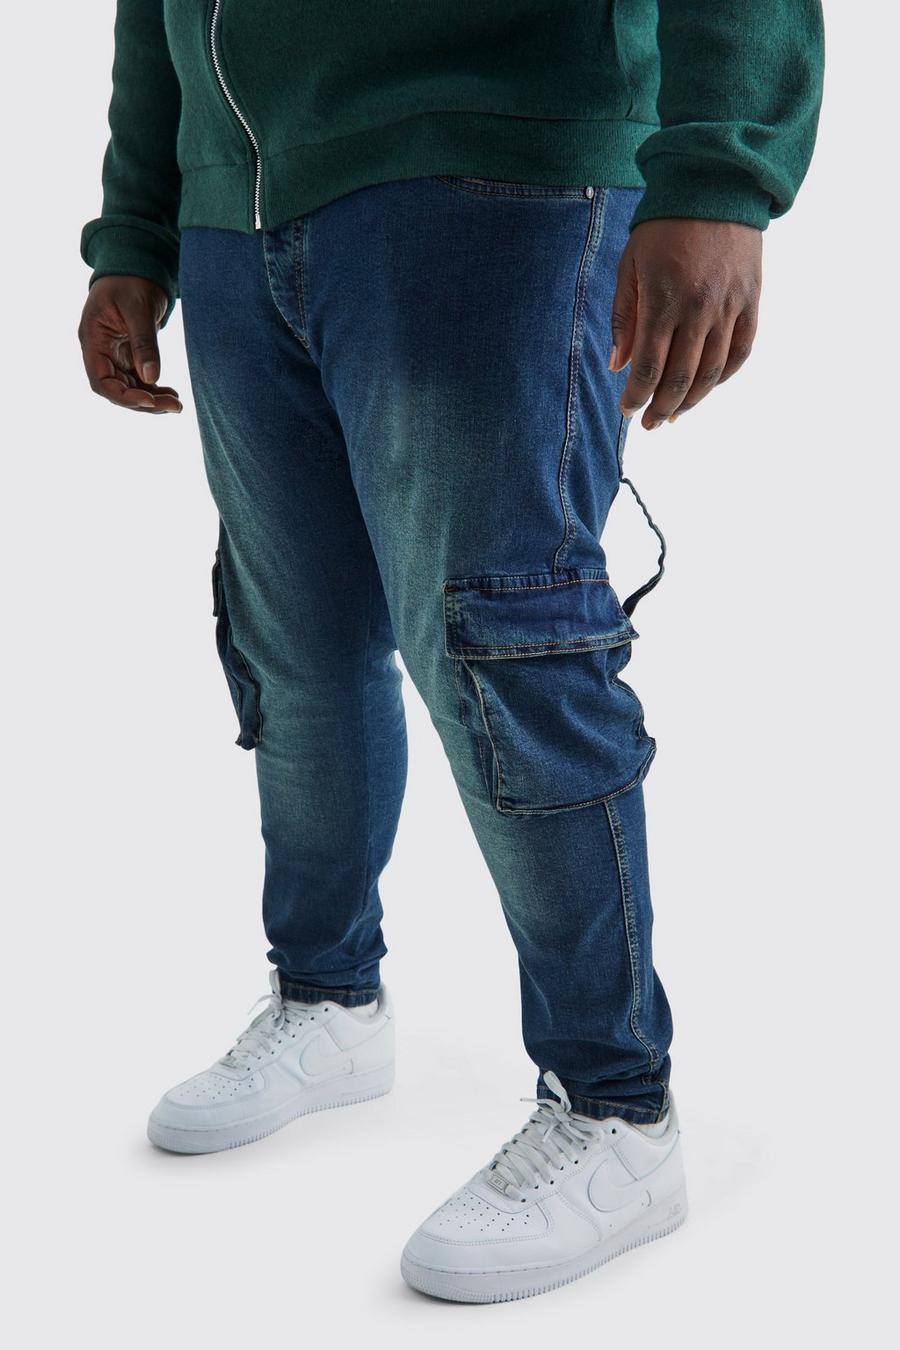 Jeans Cargo Plus Size Skinny Fit Stretch stile Carpenter, Antique blue